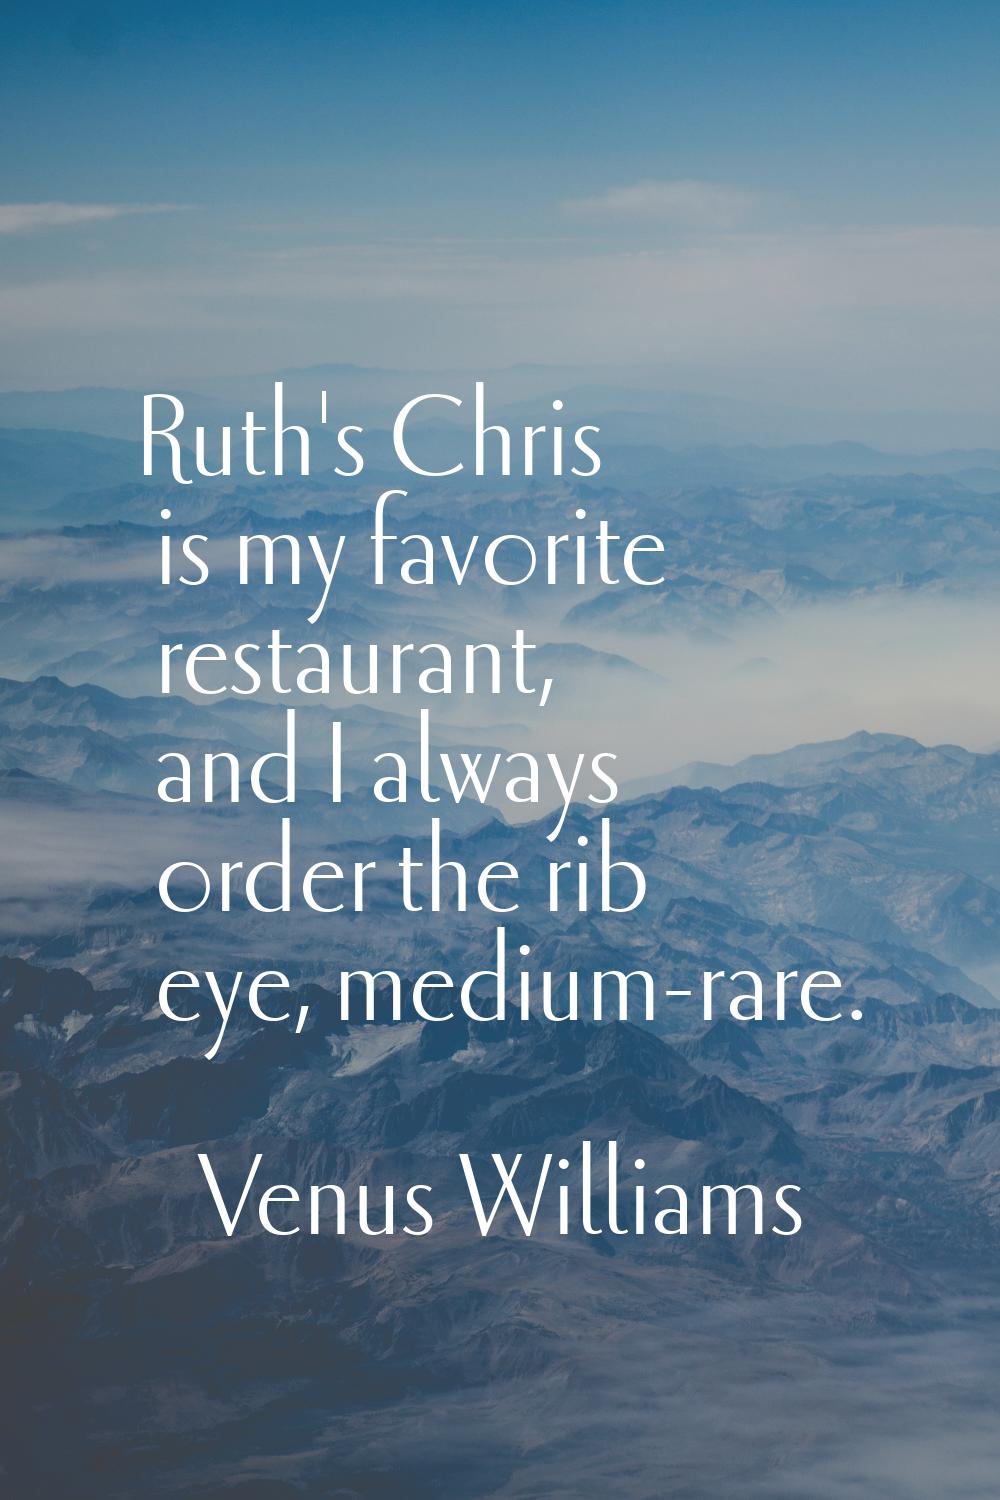 Ruth's Chris is my favorite restaurant, and I always order the rib eye, medium-rare.